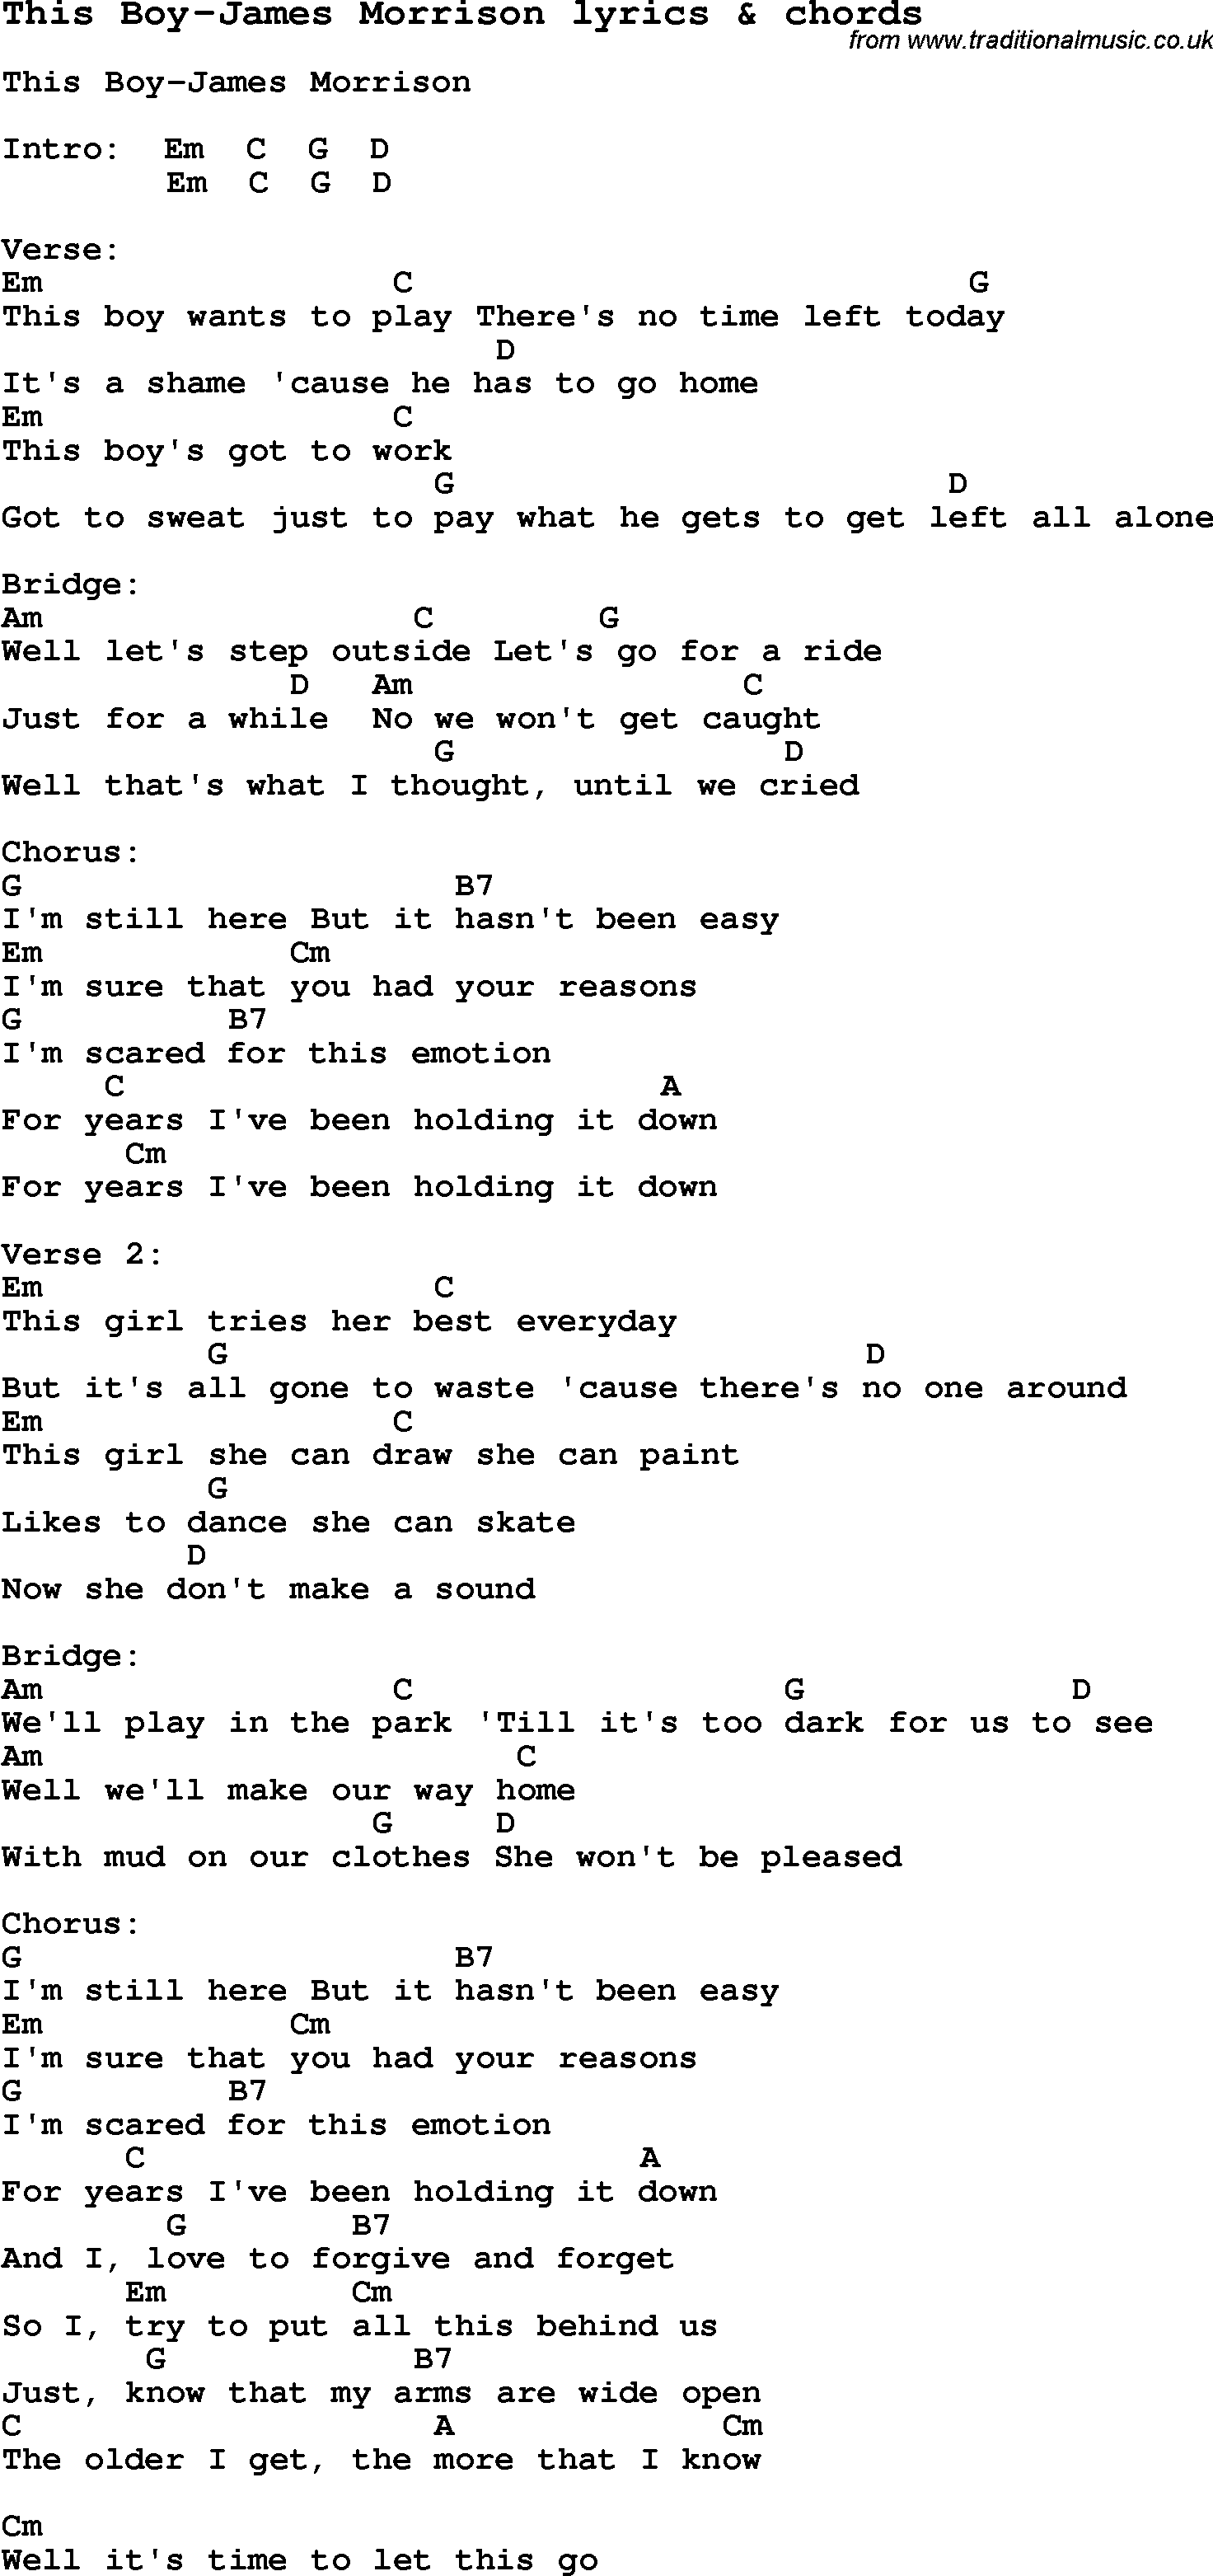 Love Song Lyrics for: This Boy-James Morrison with chords for Ukulele, Guitar Banjo etc.